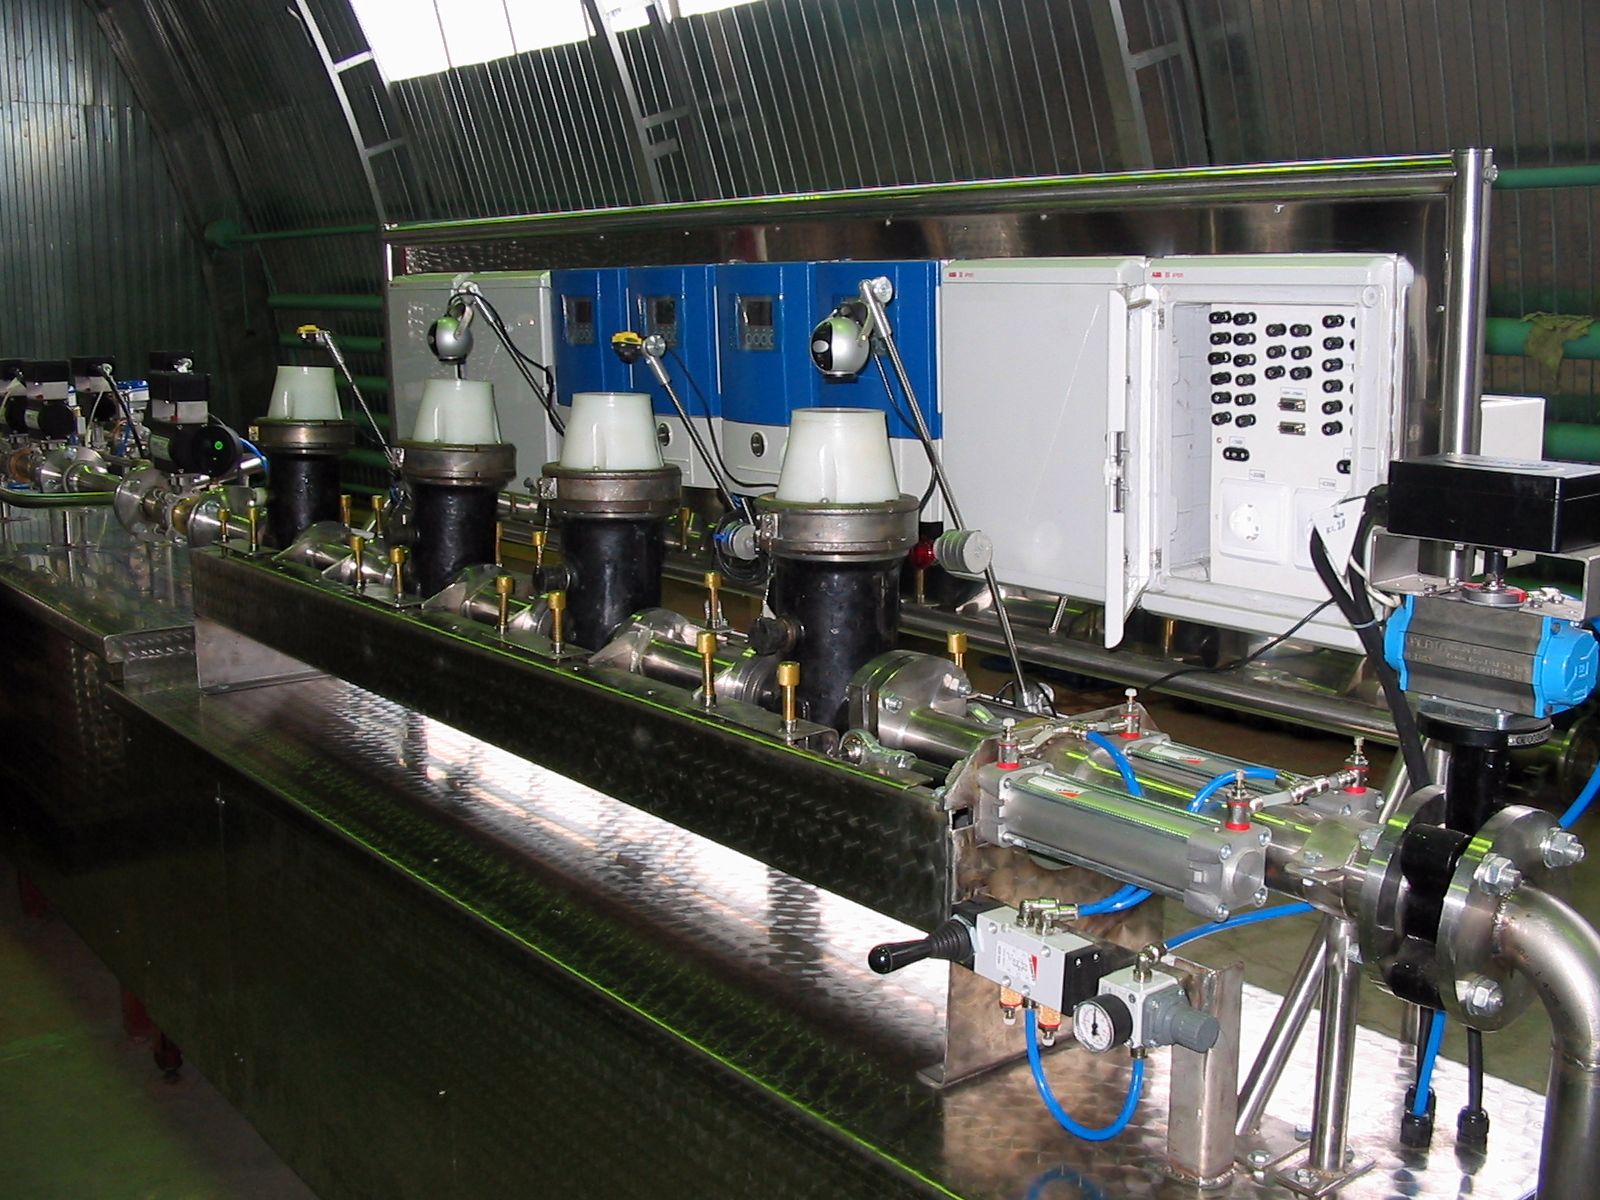 Water and Oil Flow Meters Calibration Test Bench Systems Medidores de Vazão banco de ensaio de calibração, معايرة متر التدفق ، معايرة عداد المياه